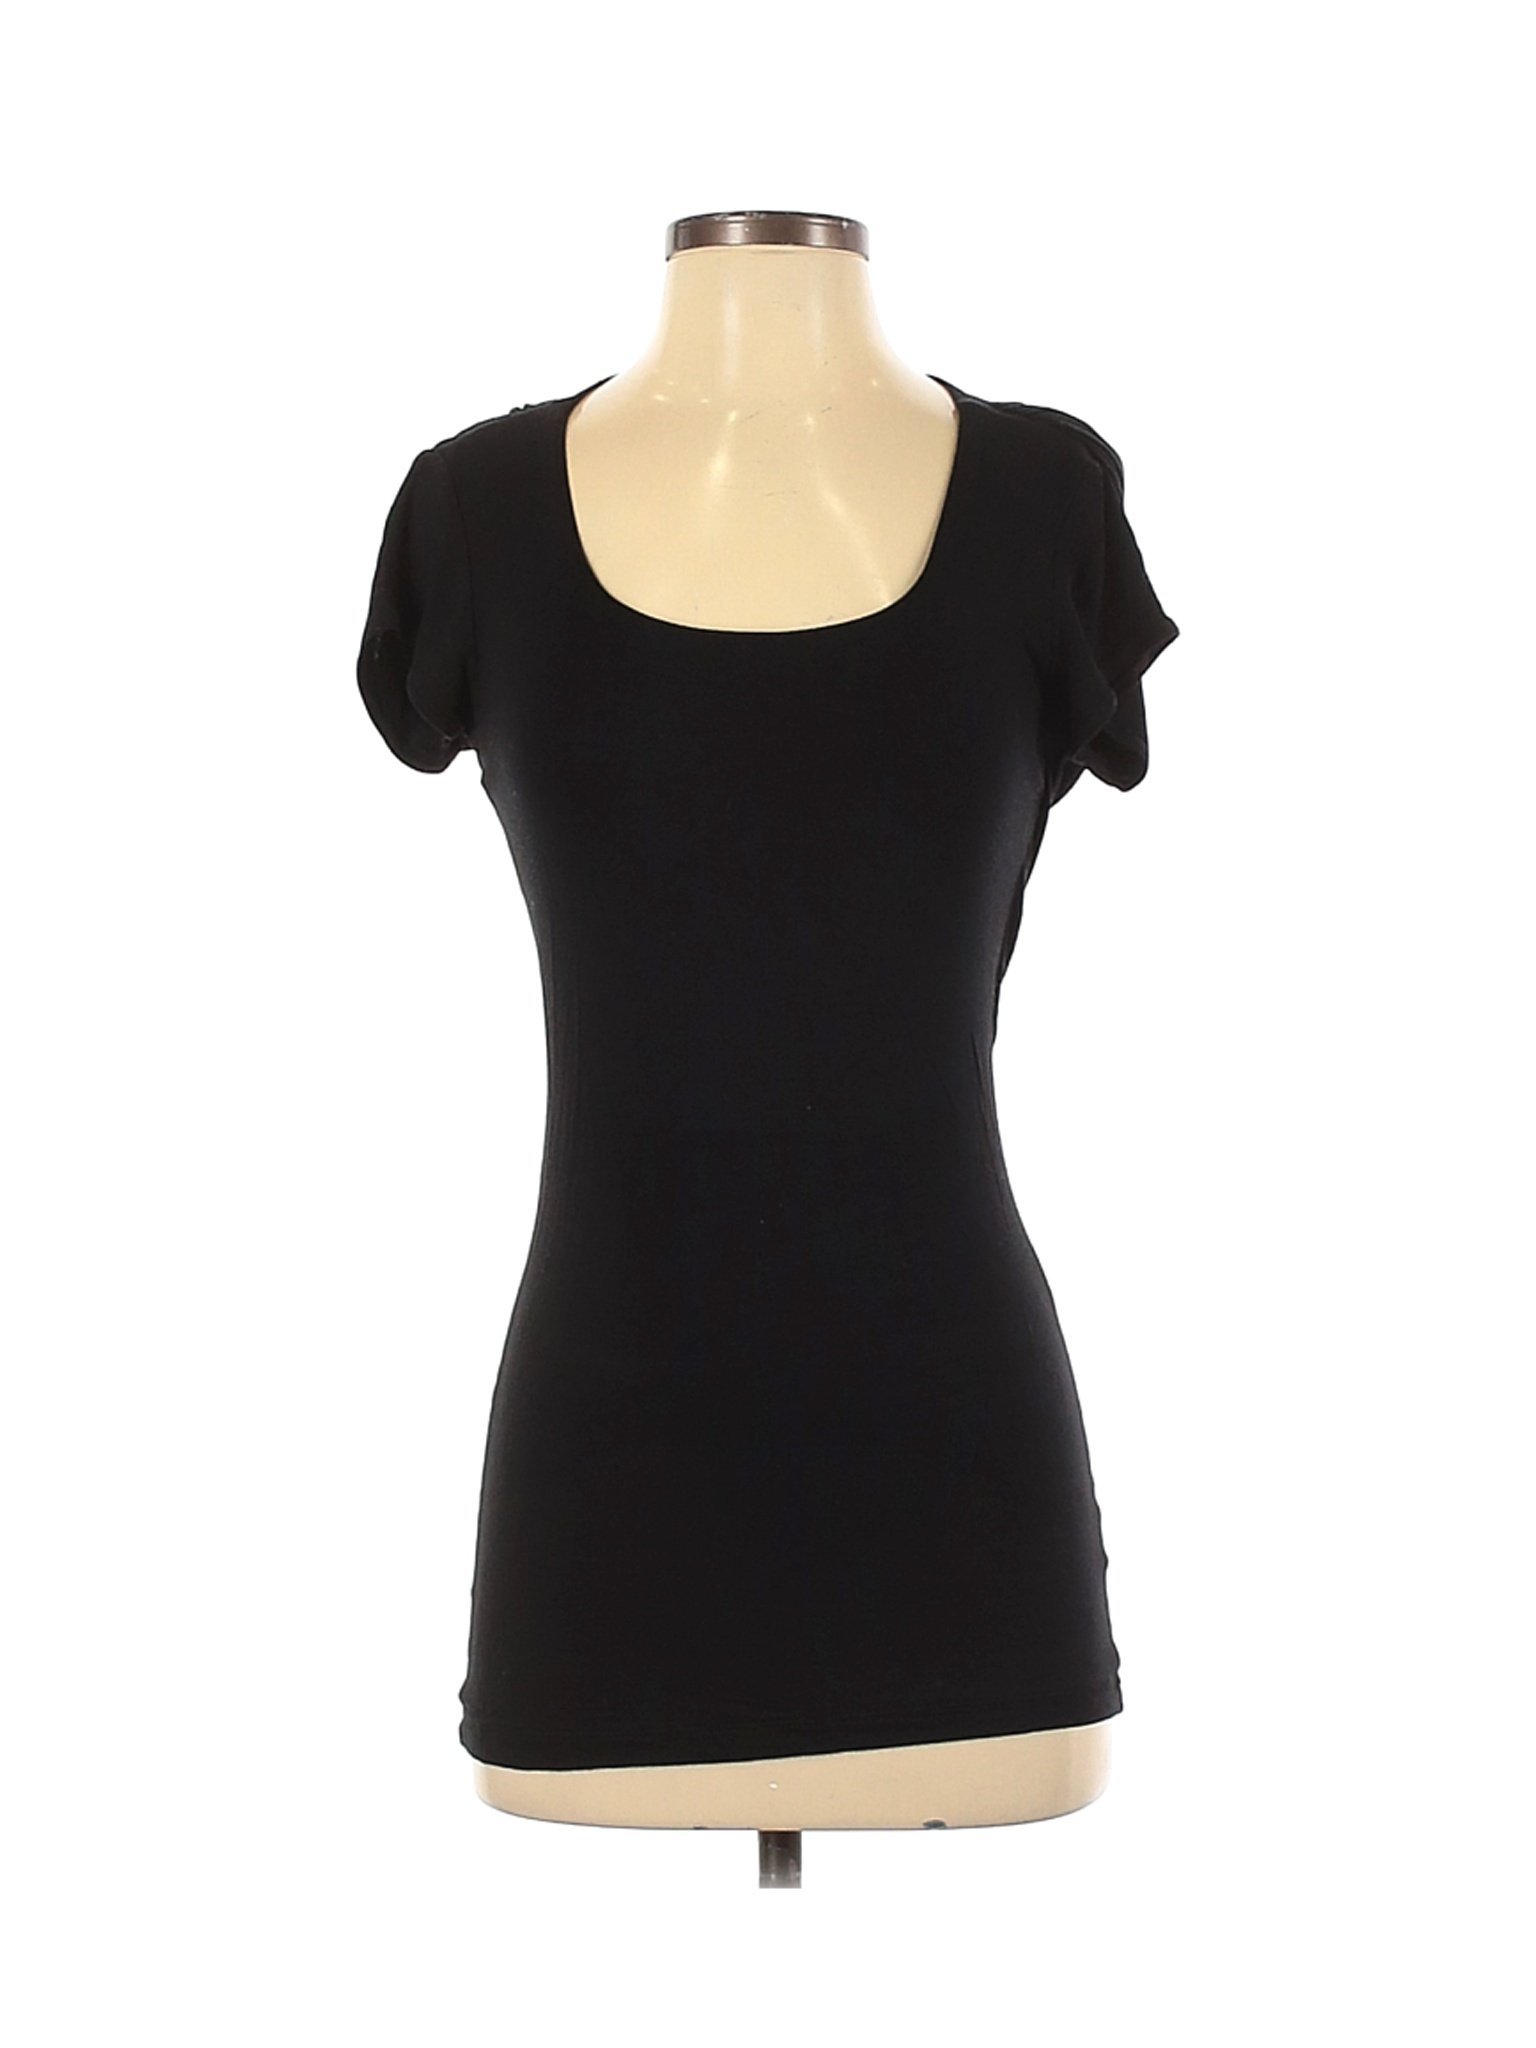 NWT CAbi Women Black Short Sleeve Top XS | eBay